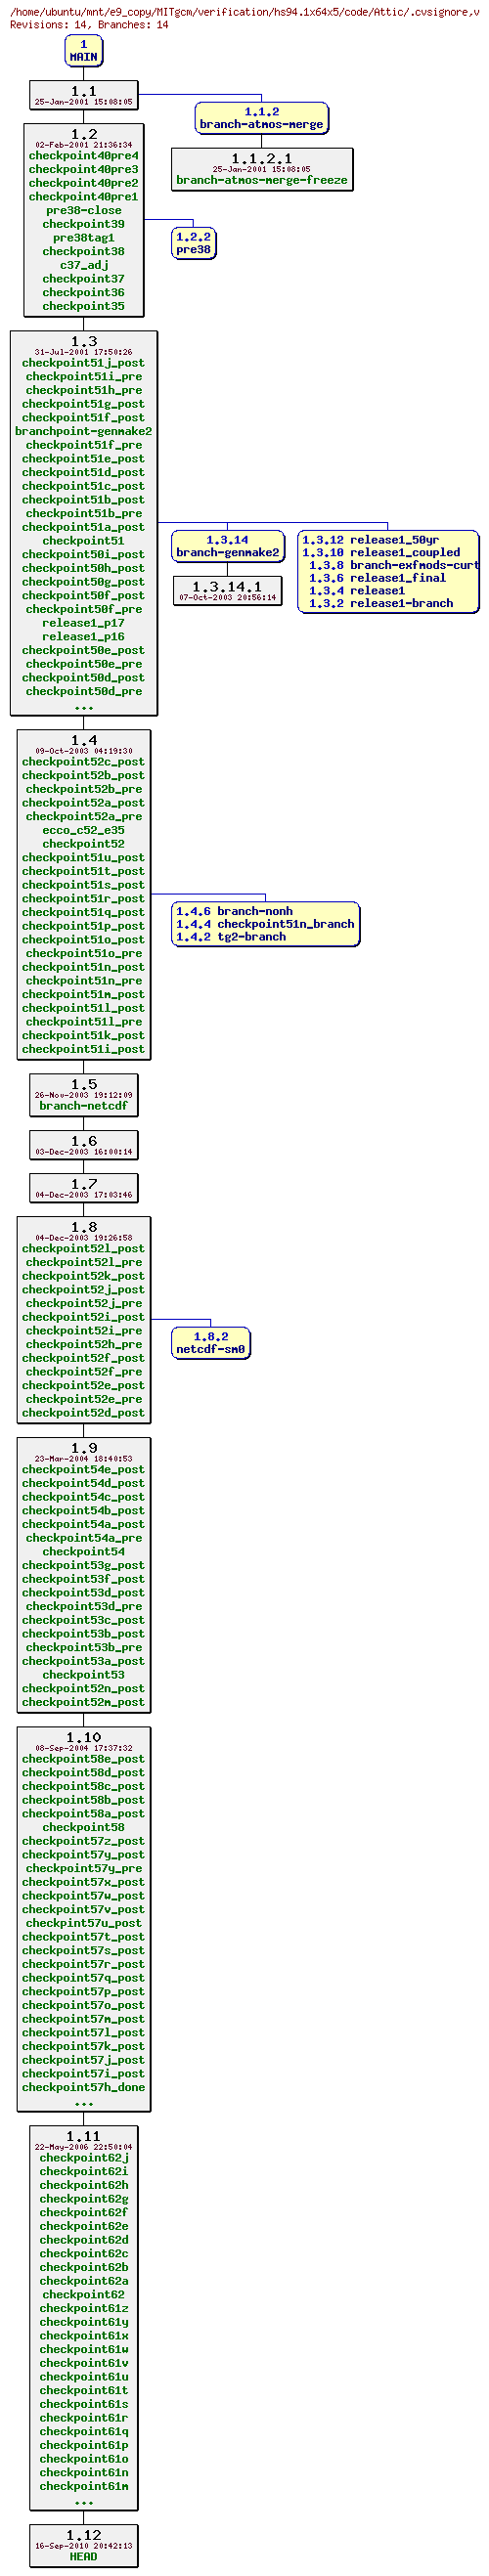 Revisions of MITgcm/verification/hs94.1x64x5/code/.cvsignore